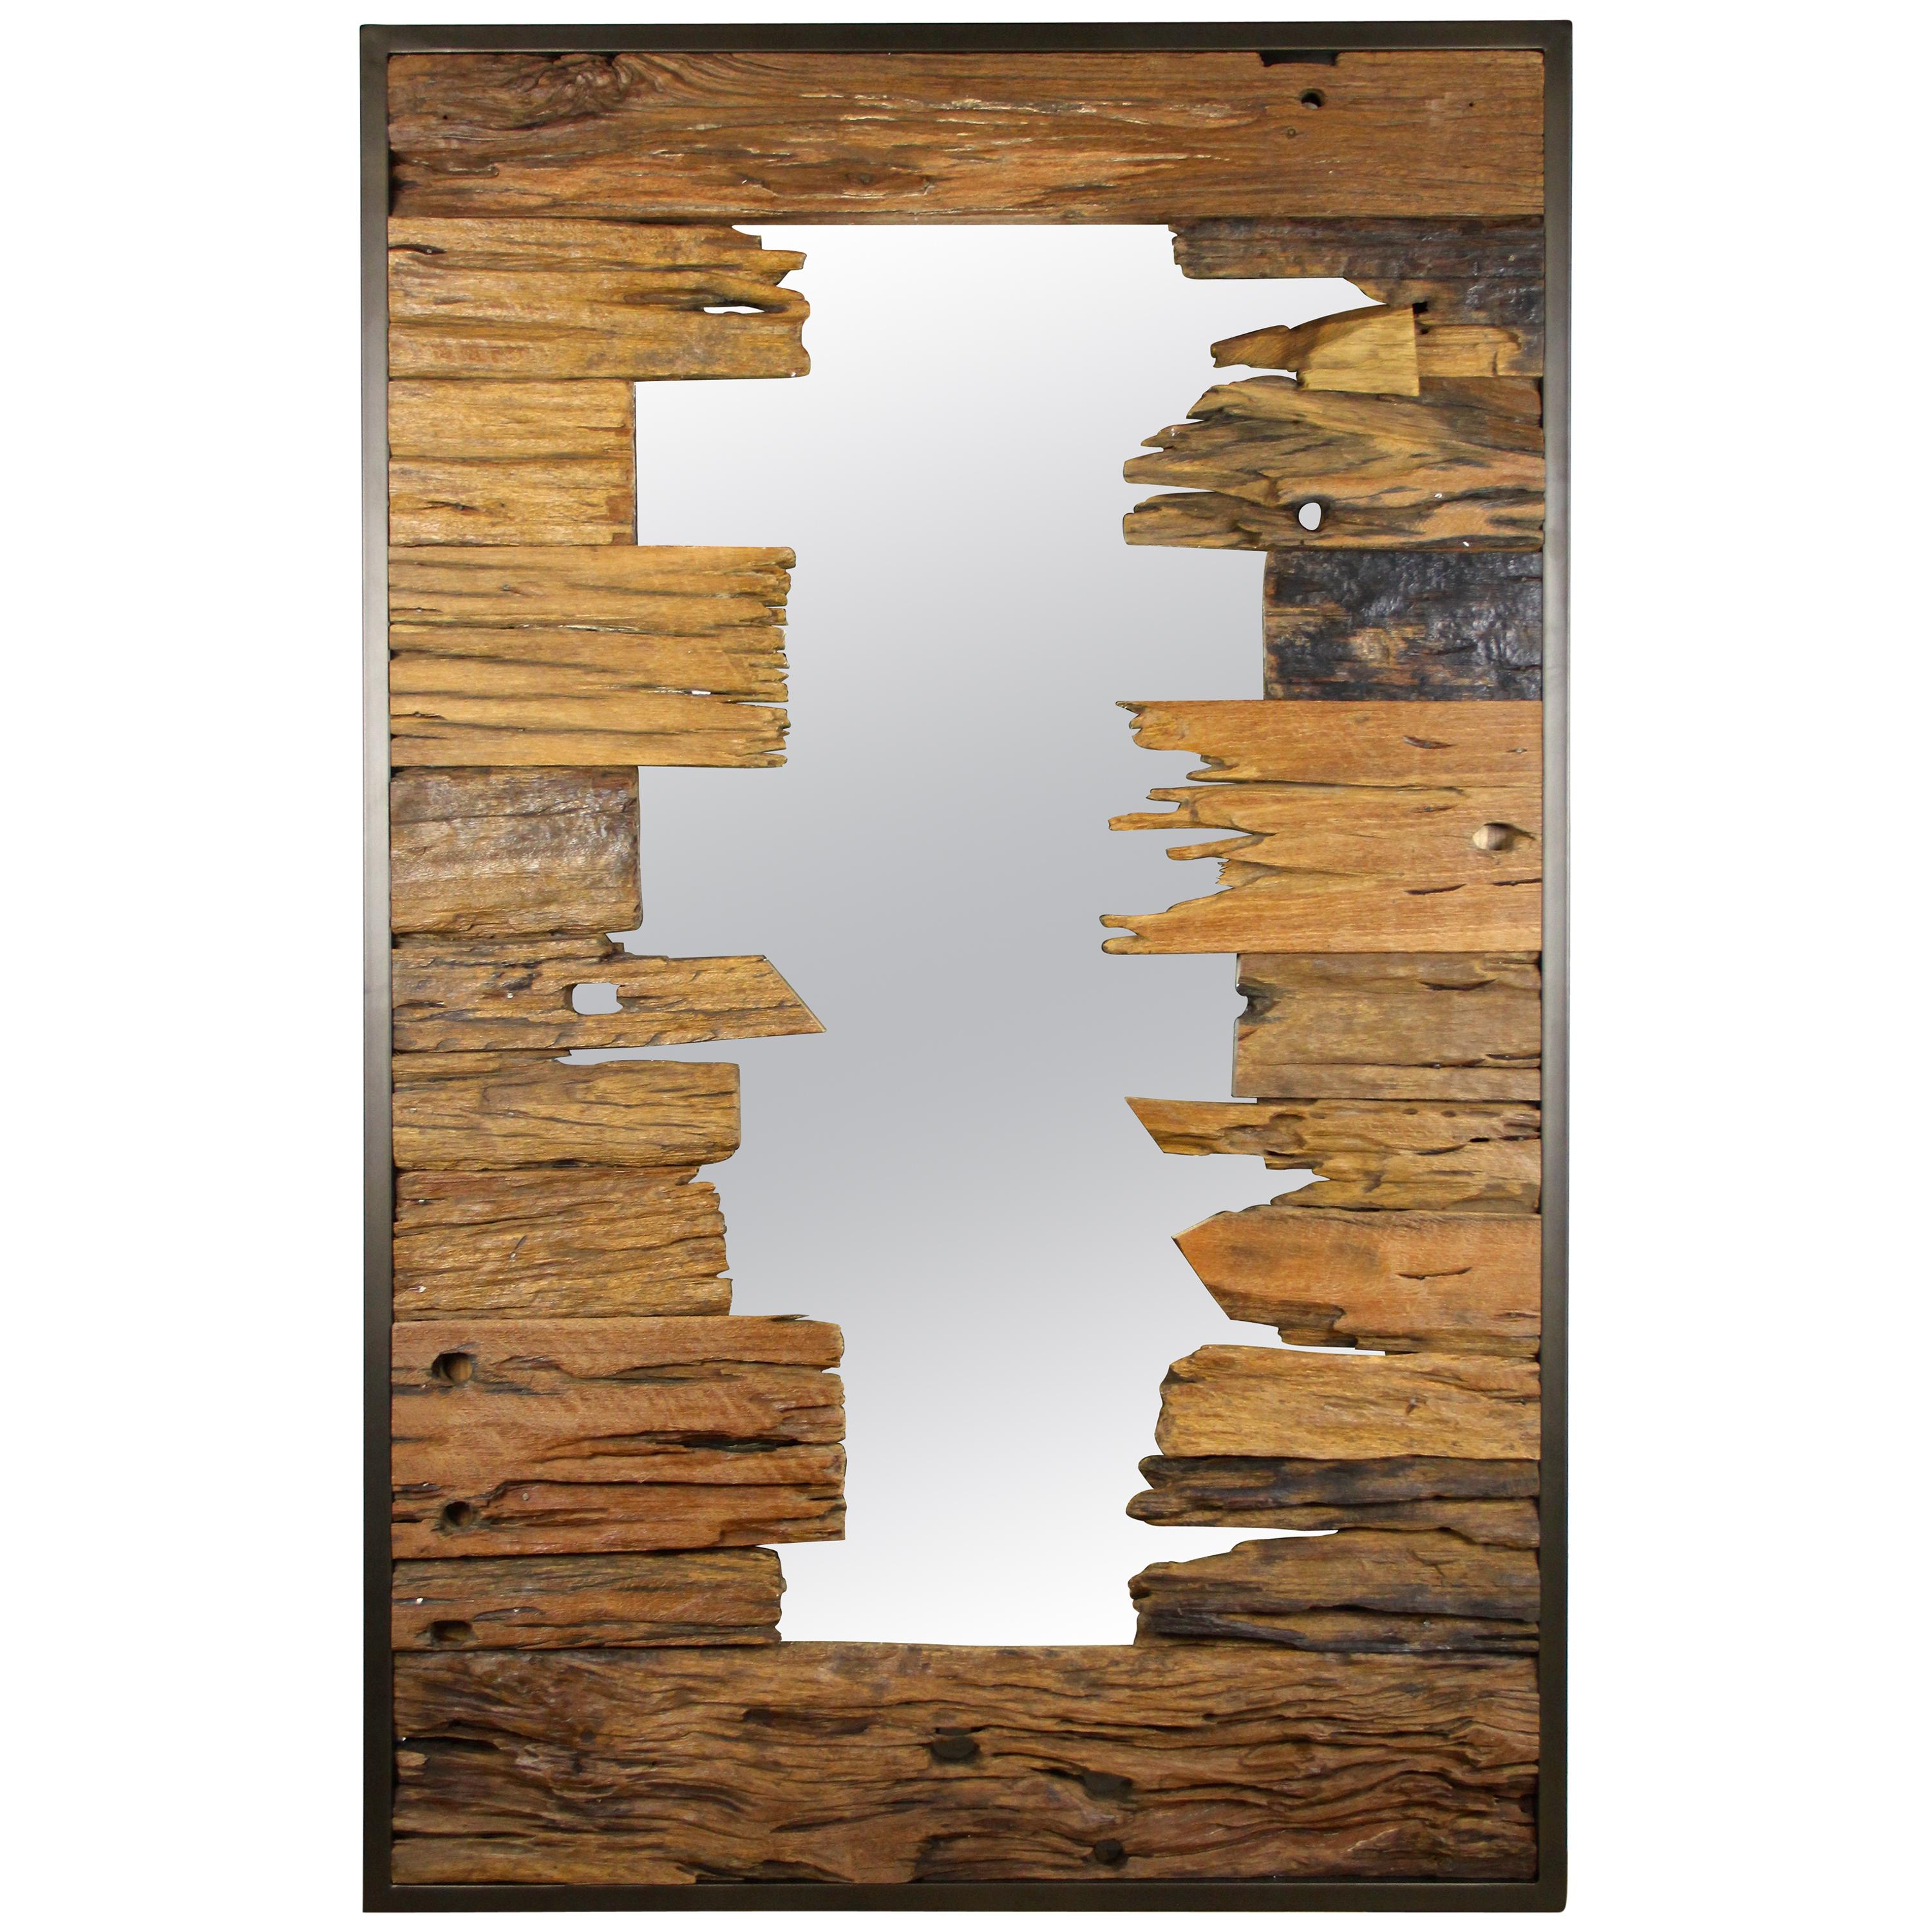 Modern Driftwood Wall Mirror "Broken Ship" with Metal Frame